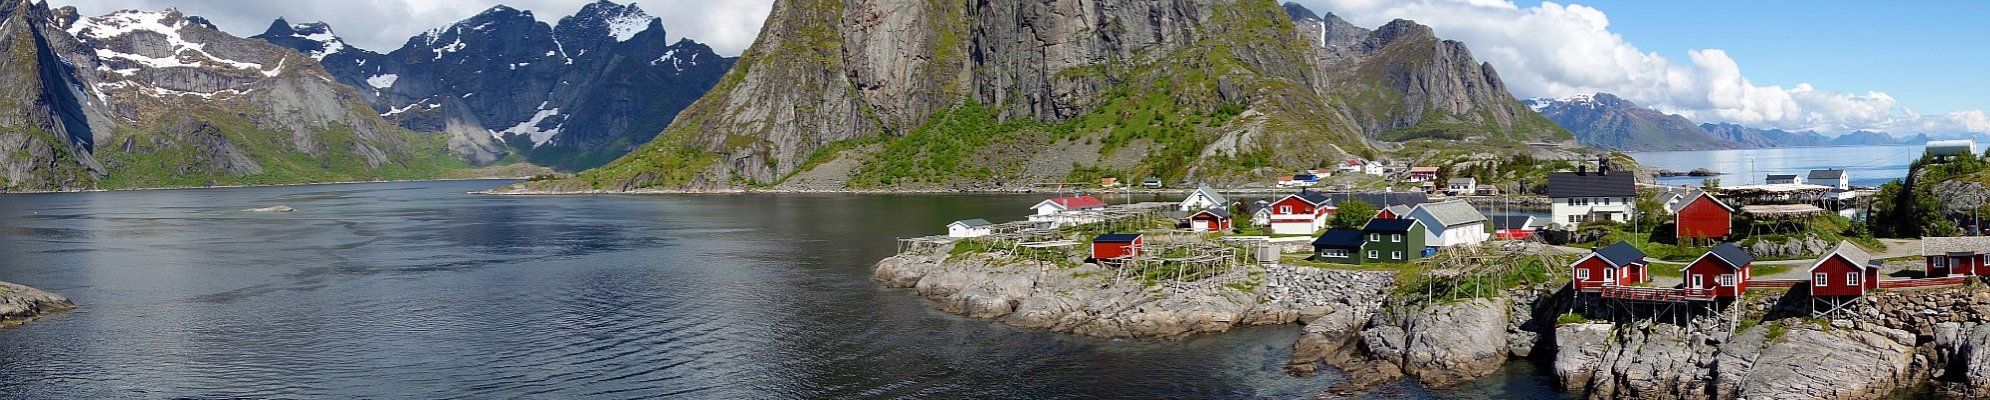 Norwegen © Ronile auf Pixabay